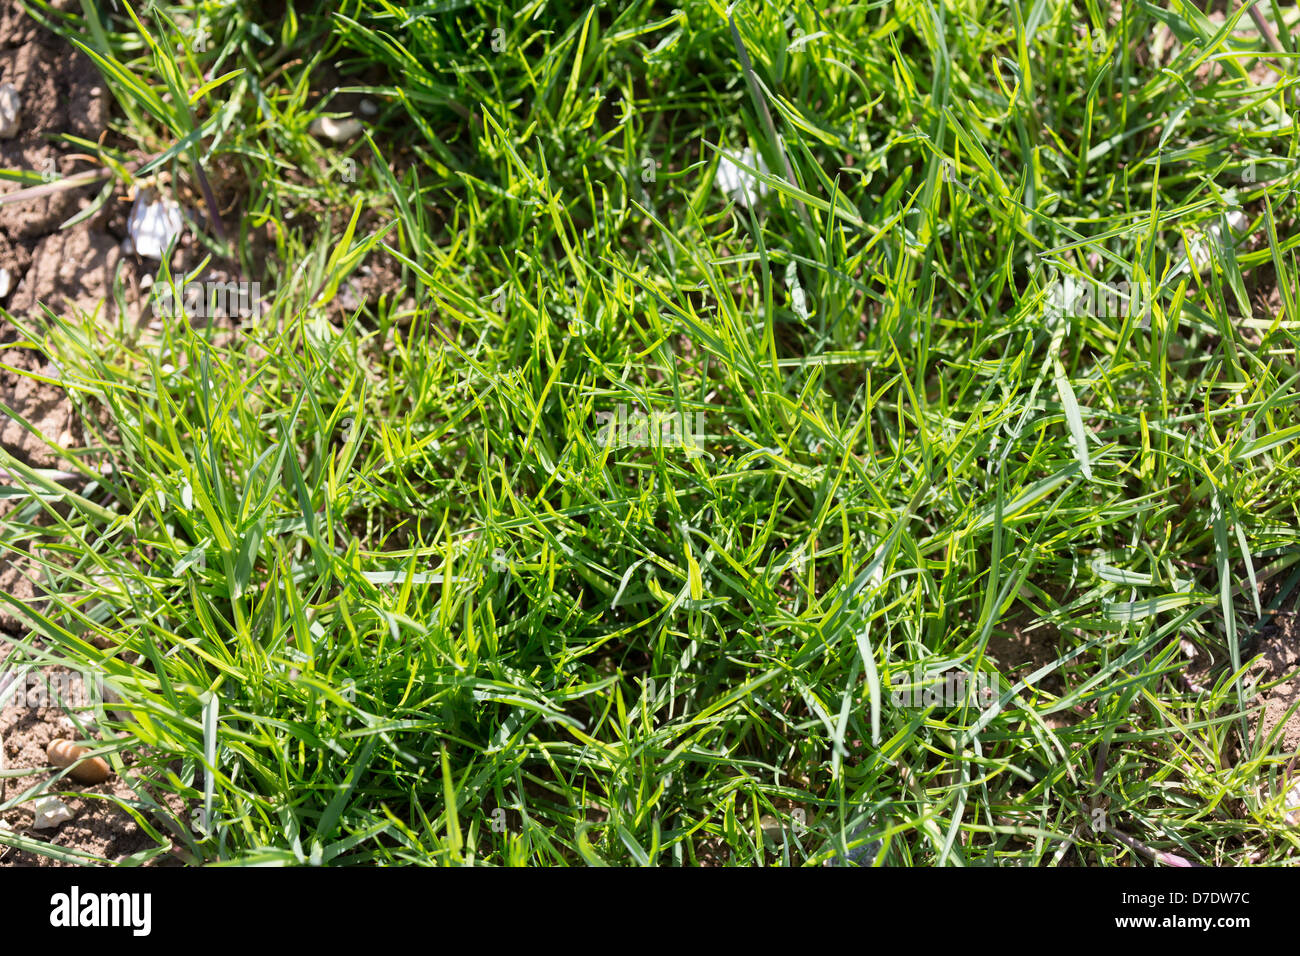 Grobe gestielt Meadow Grass Bild Tim Scrivener 07850 303986 tim@agriphoto.com É.covering Landwirtschaft in der UKÉ. Stockfoto